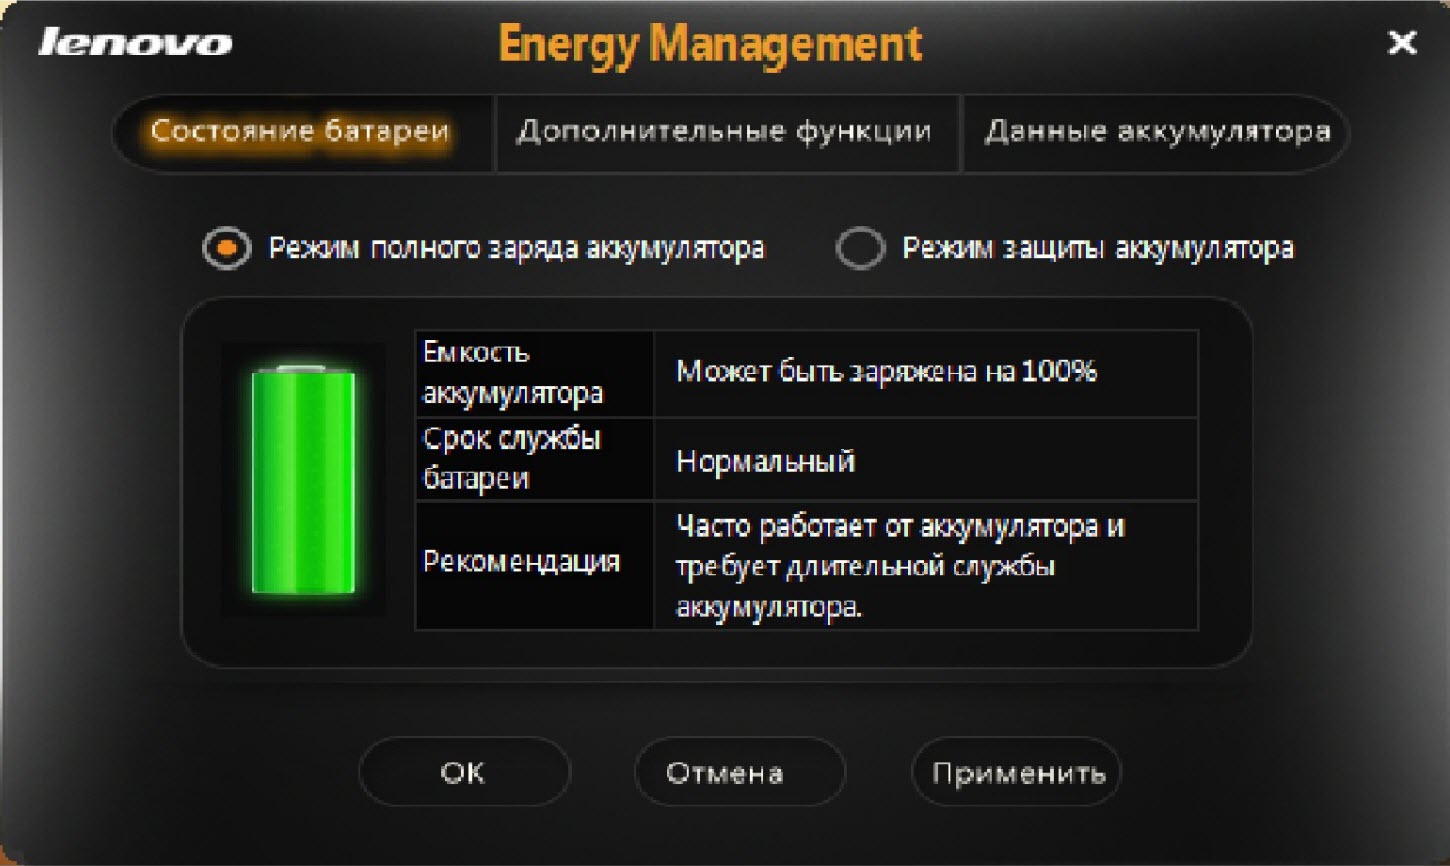 Battery manager. Lenovo Energy Management. Менеджер батареи Lenovo. Lenovo Energy Management 8.0.2.14. Программы для леново.